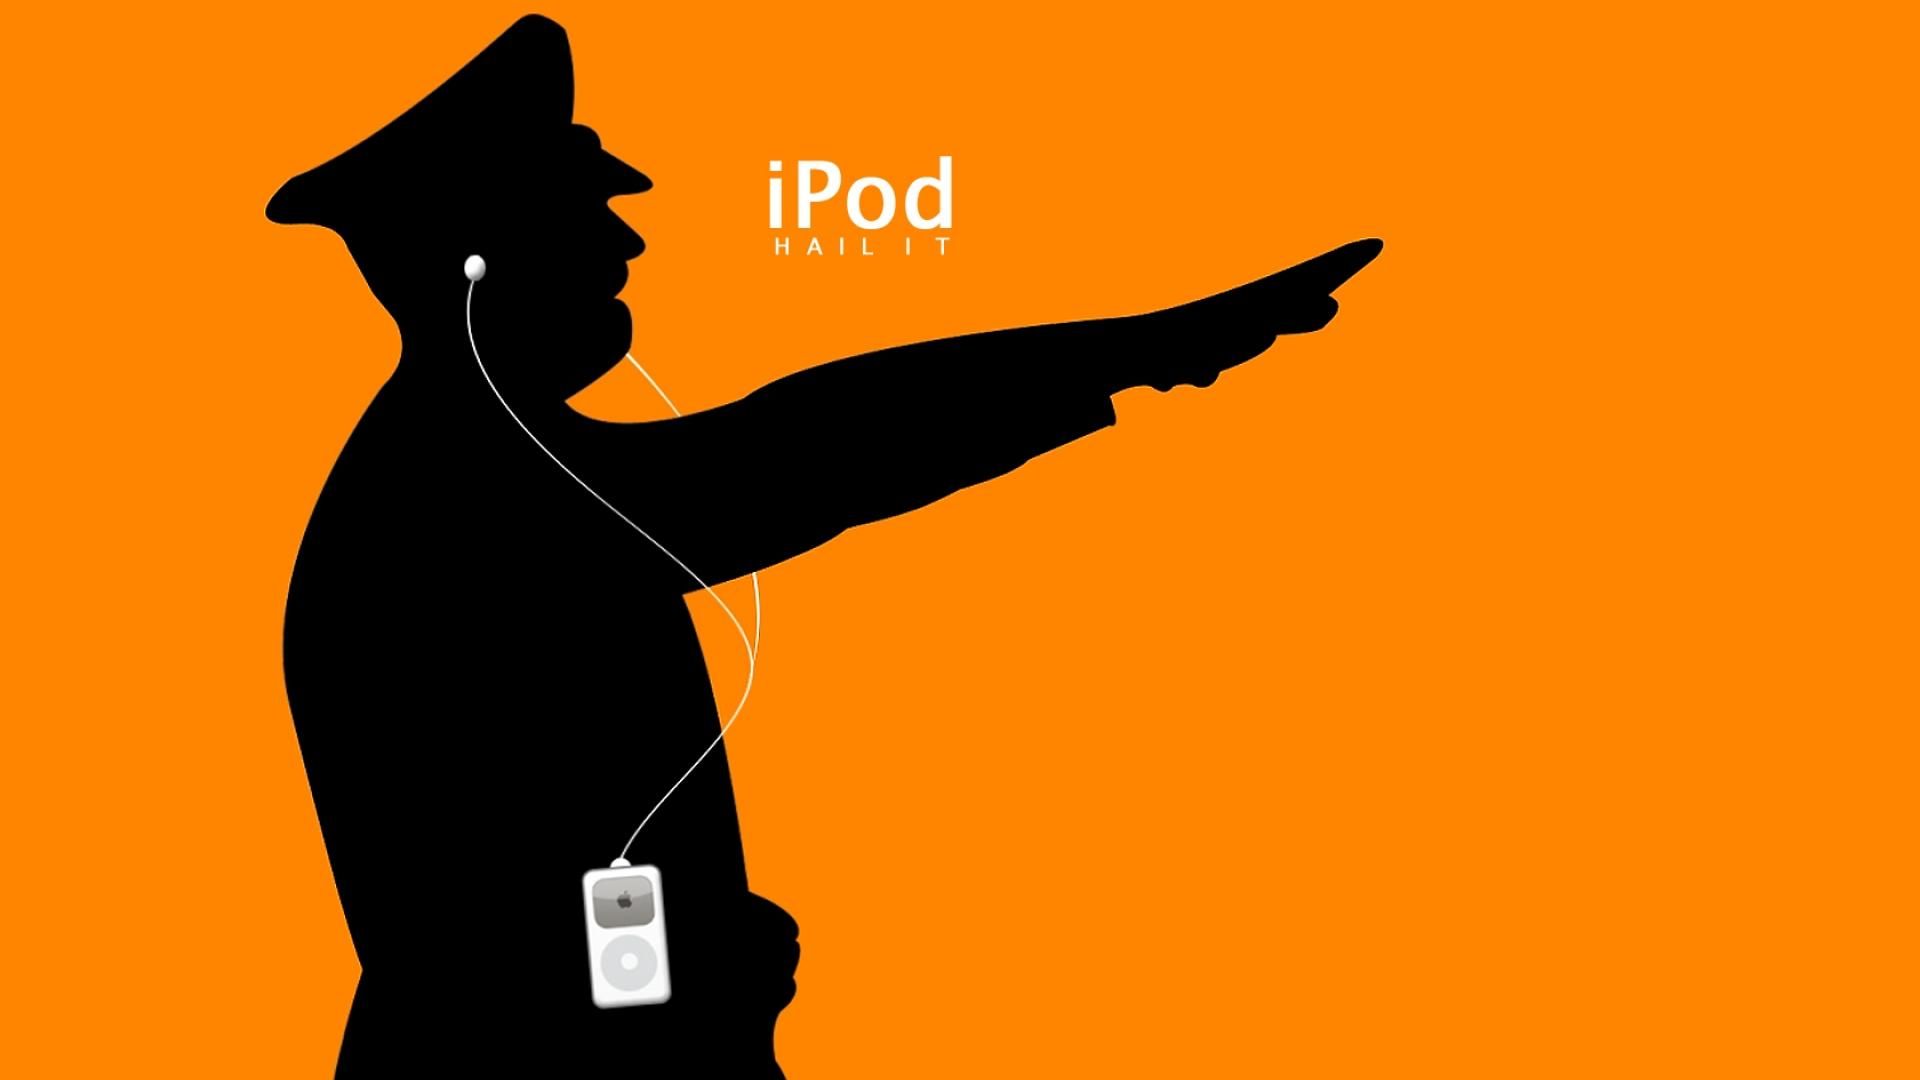 IPod - iPod Wallpaper 30545346 - Fanpop